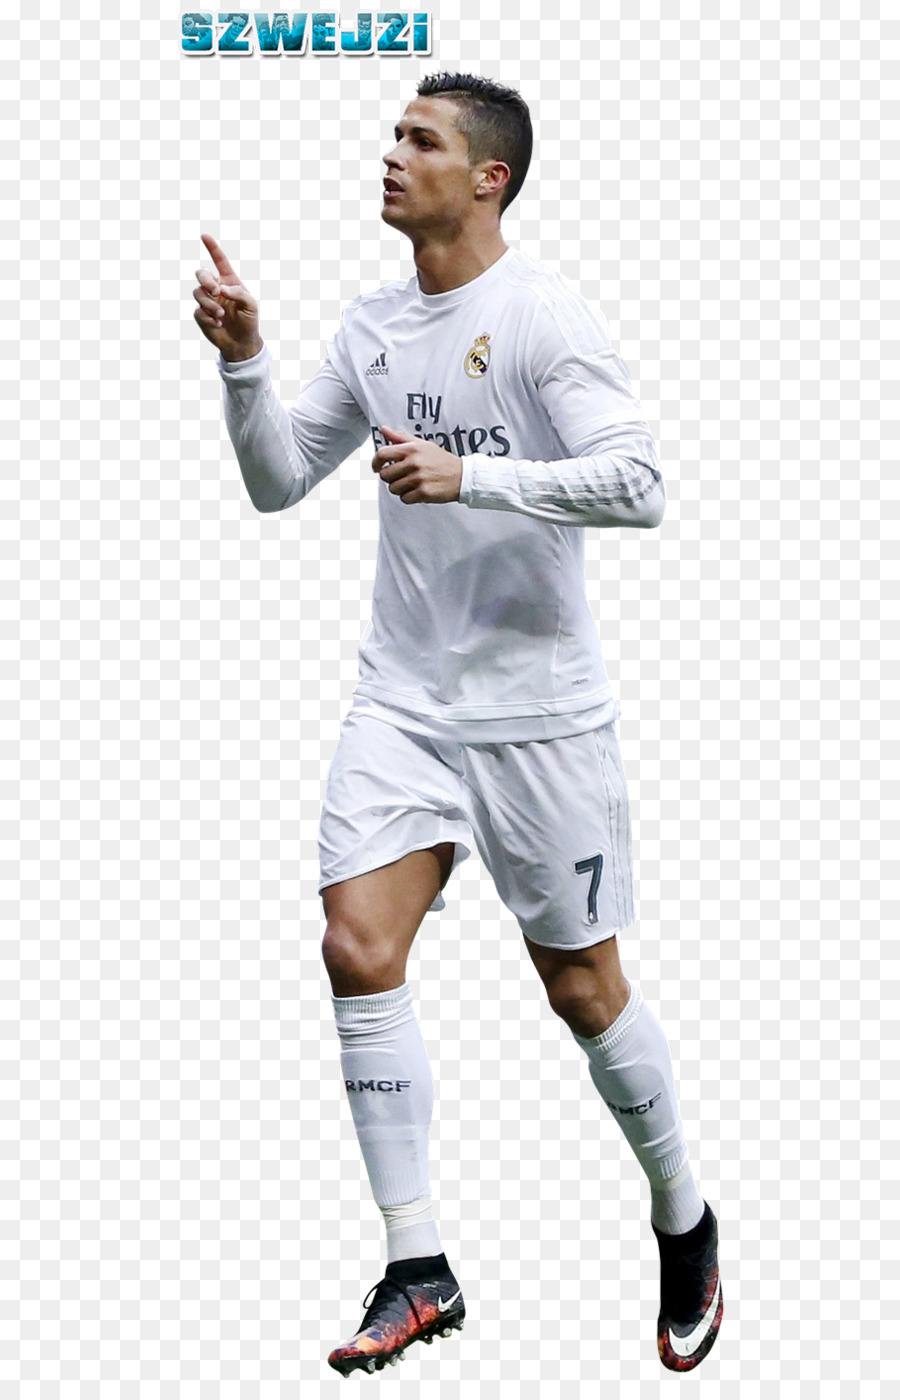 Cristiano Ronaldo Portugal national football team, Real Madrid C. F. in der UEFA Champions League - Cristiano Ronaldo